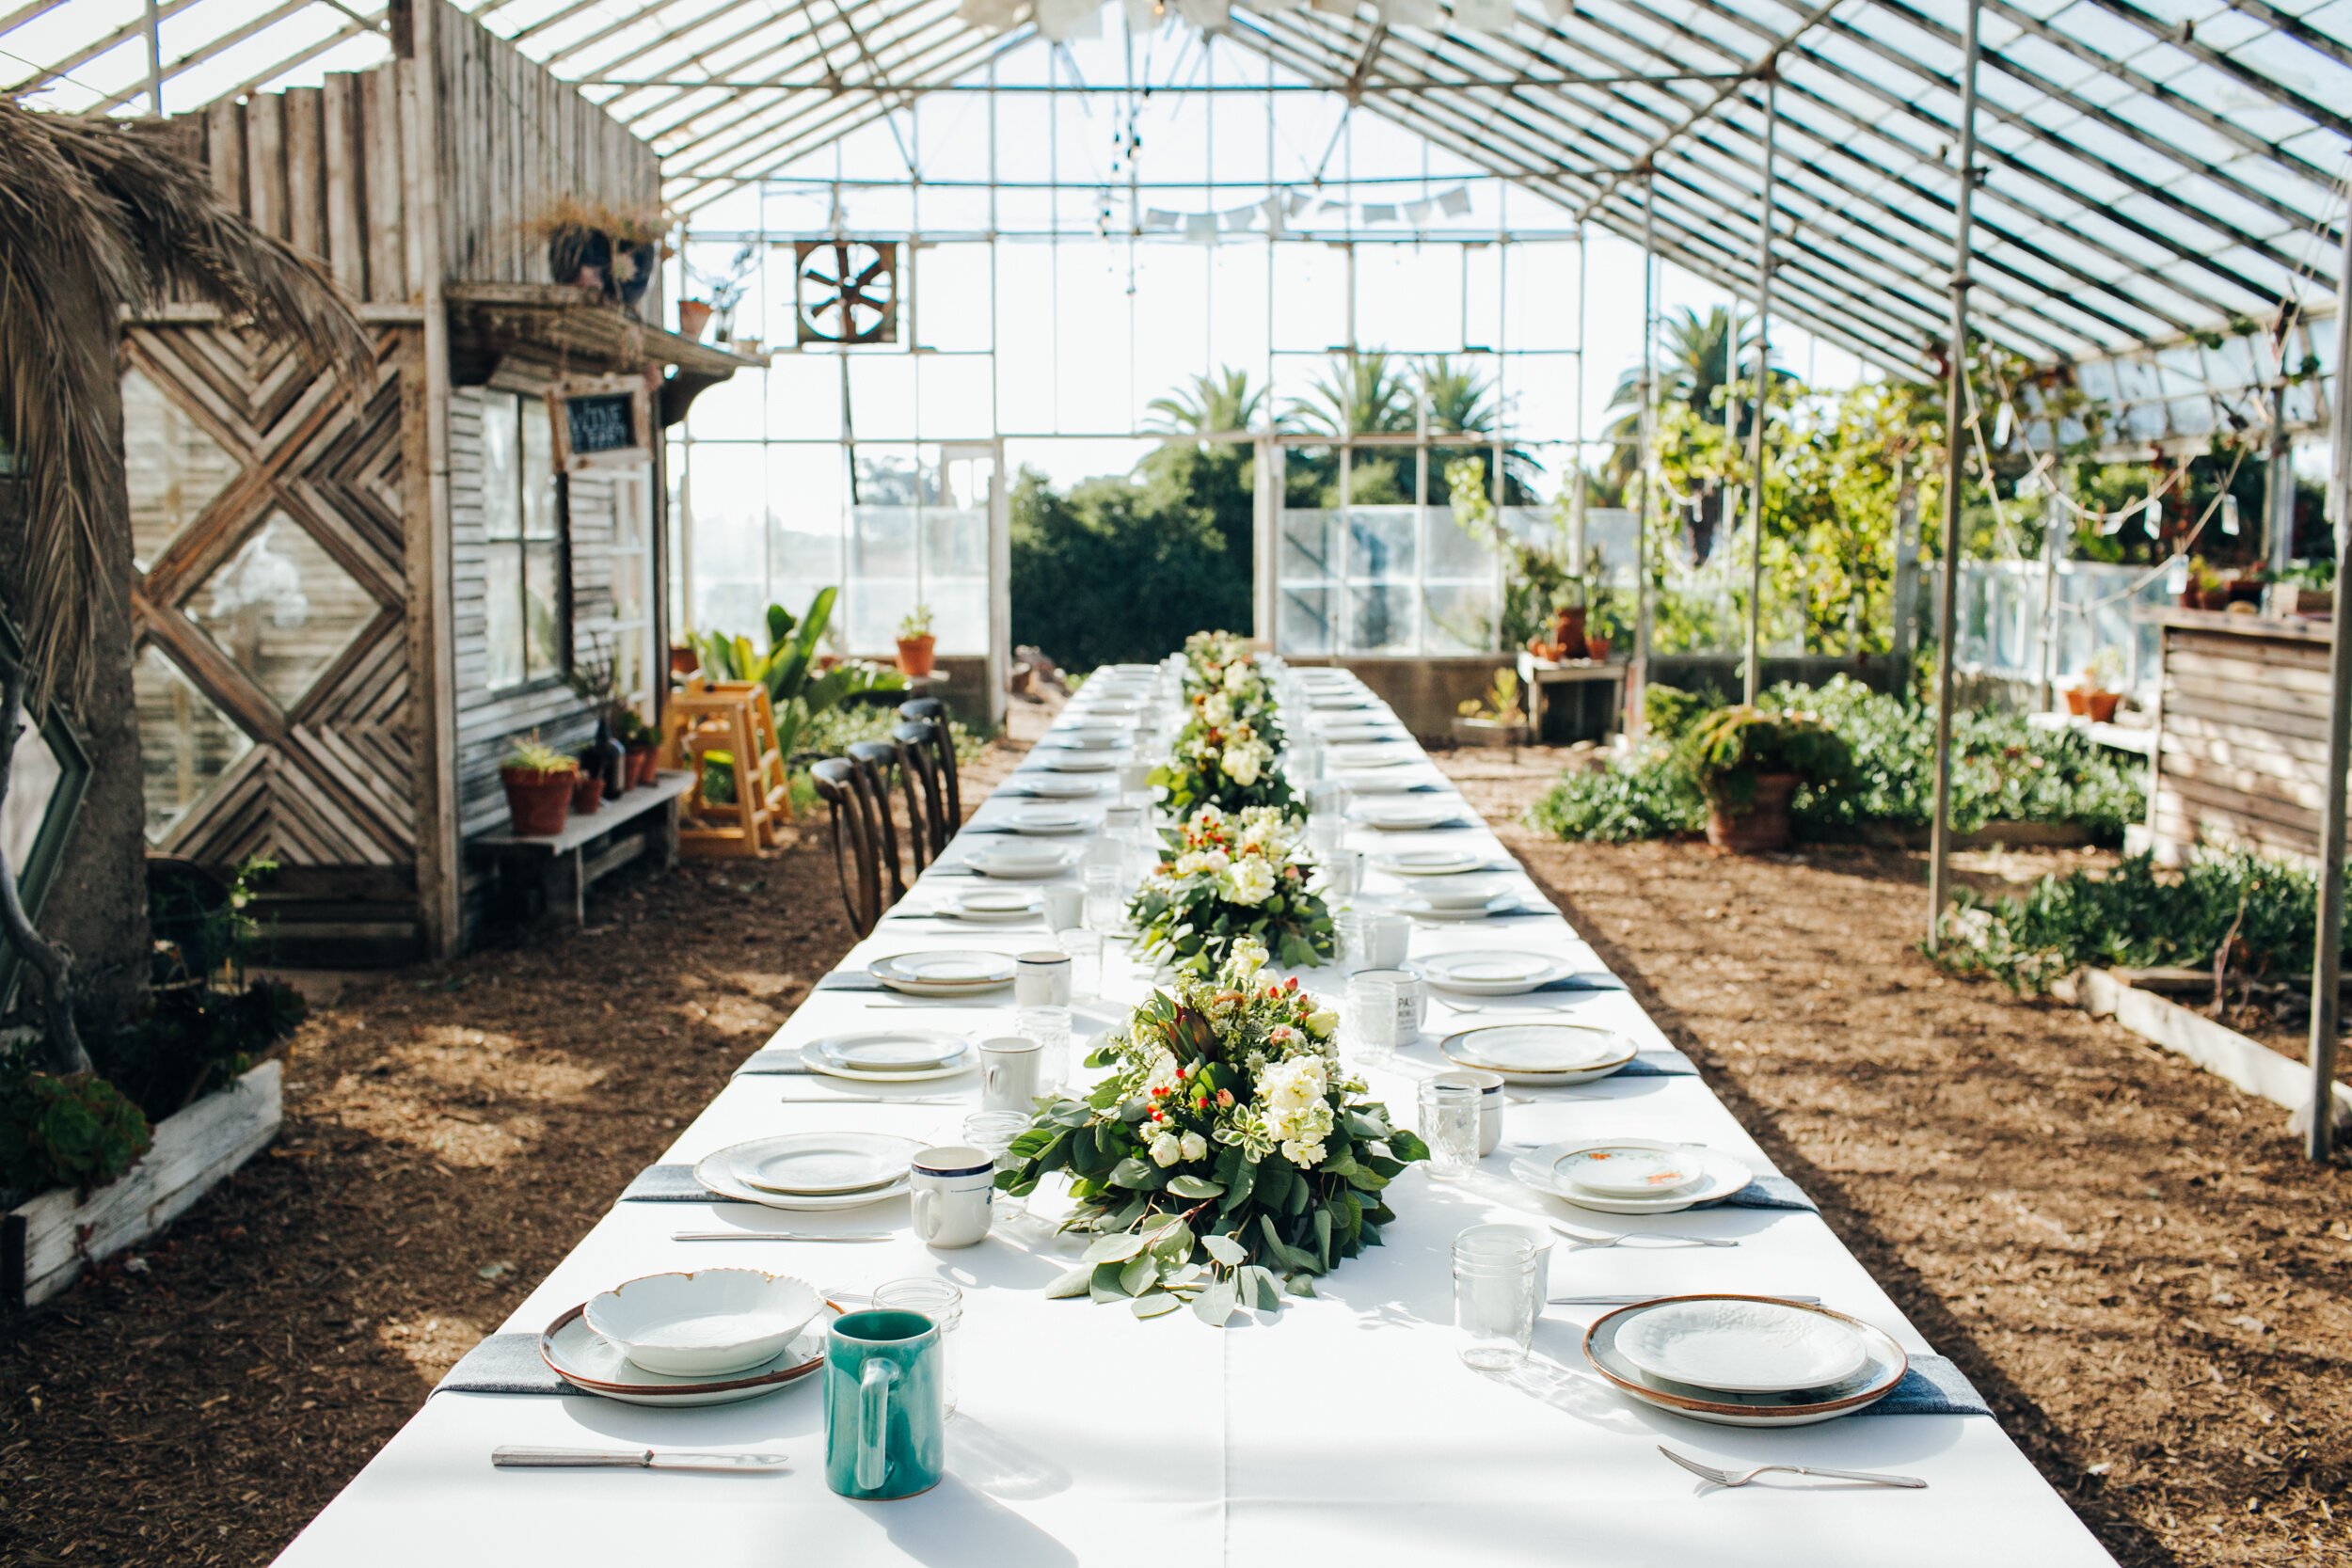 www.santabarbarawedding.com | Elli Lauren Weddings | Dos Pueblos Orchid Farm | Rebekah Xiques | The Tent Merchant | Reception Set Up in Greenhouse